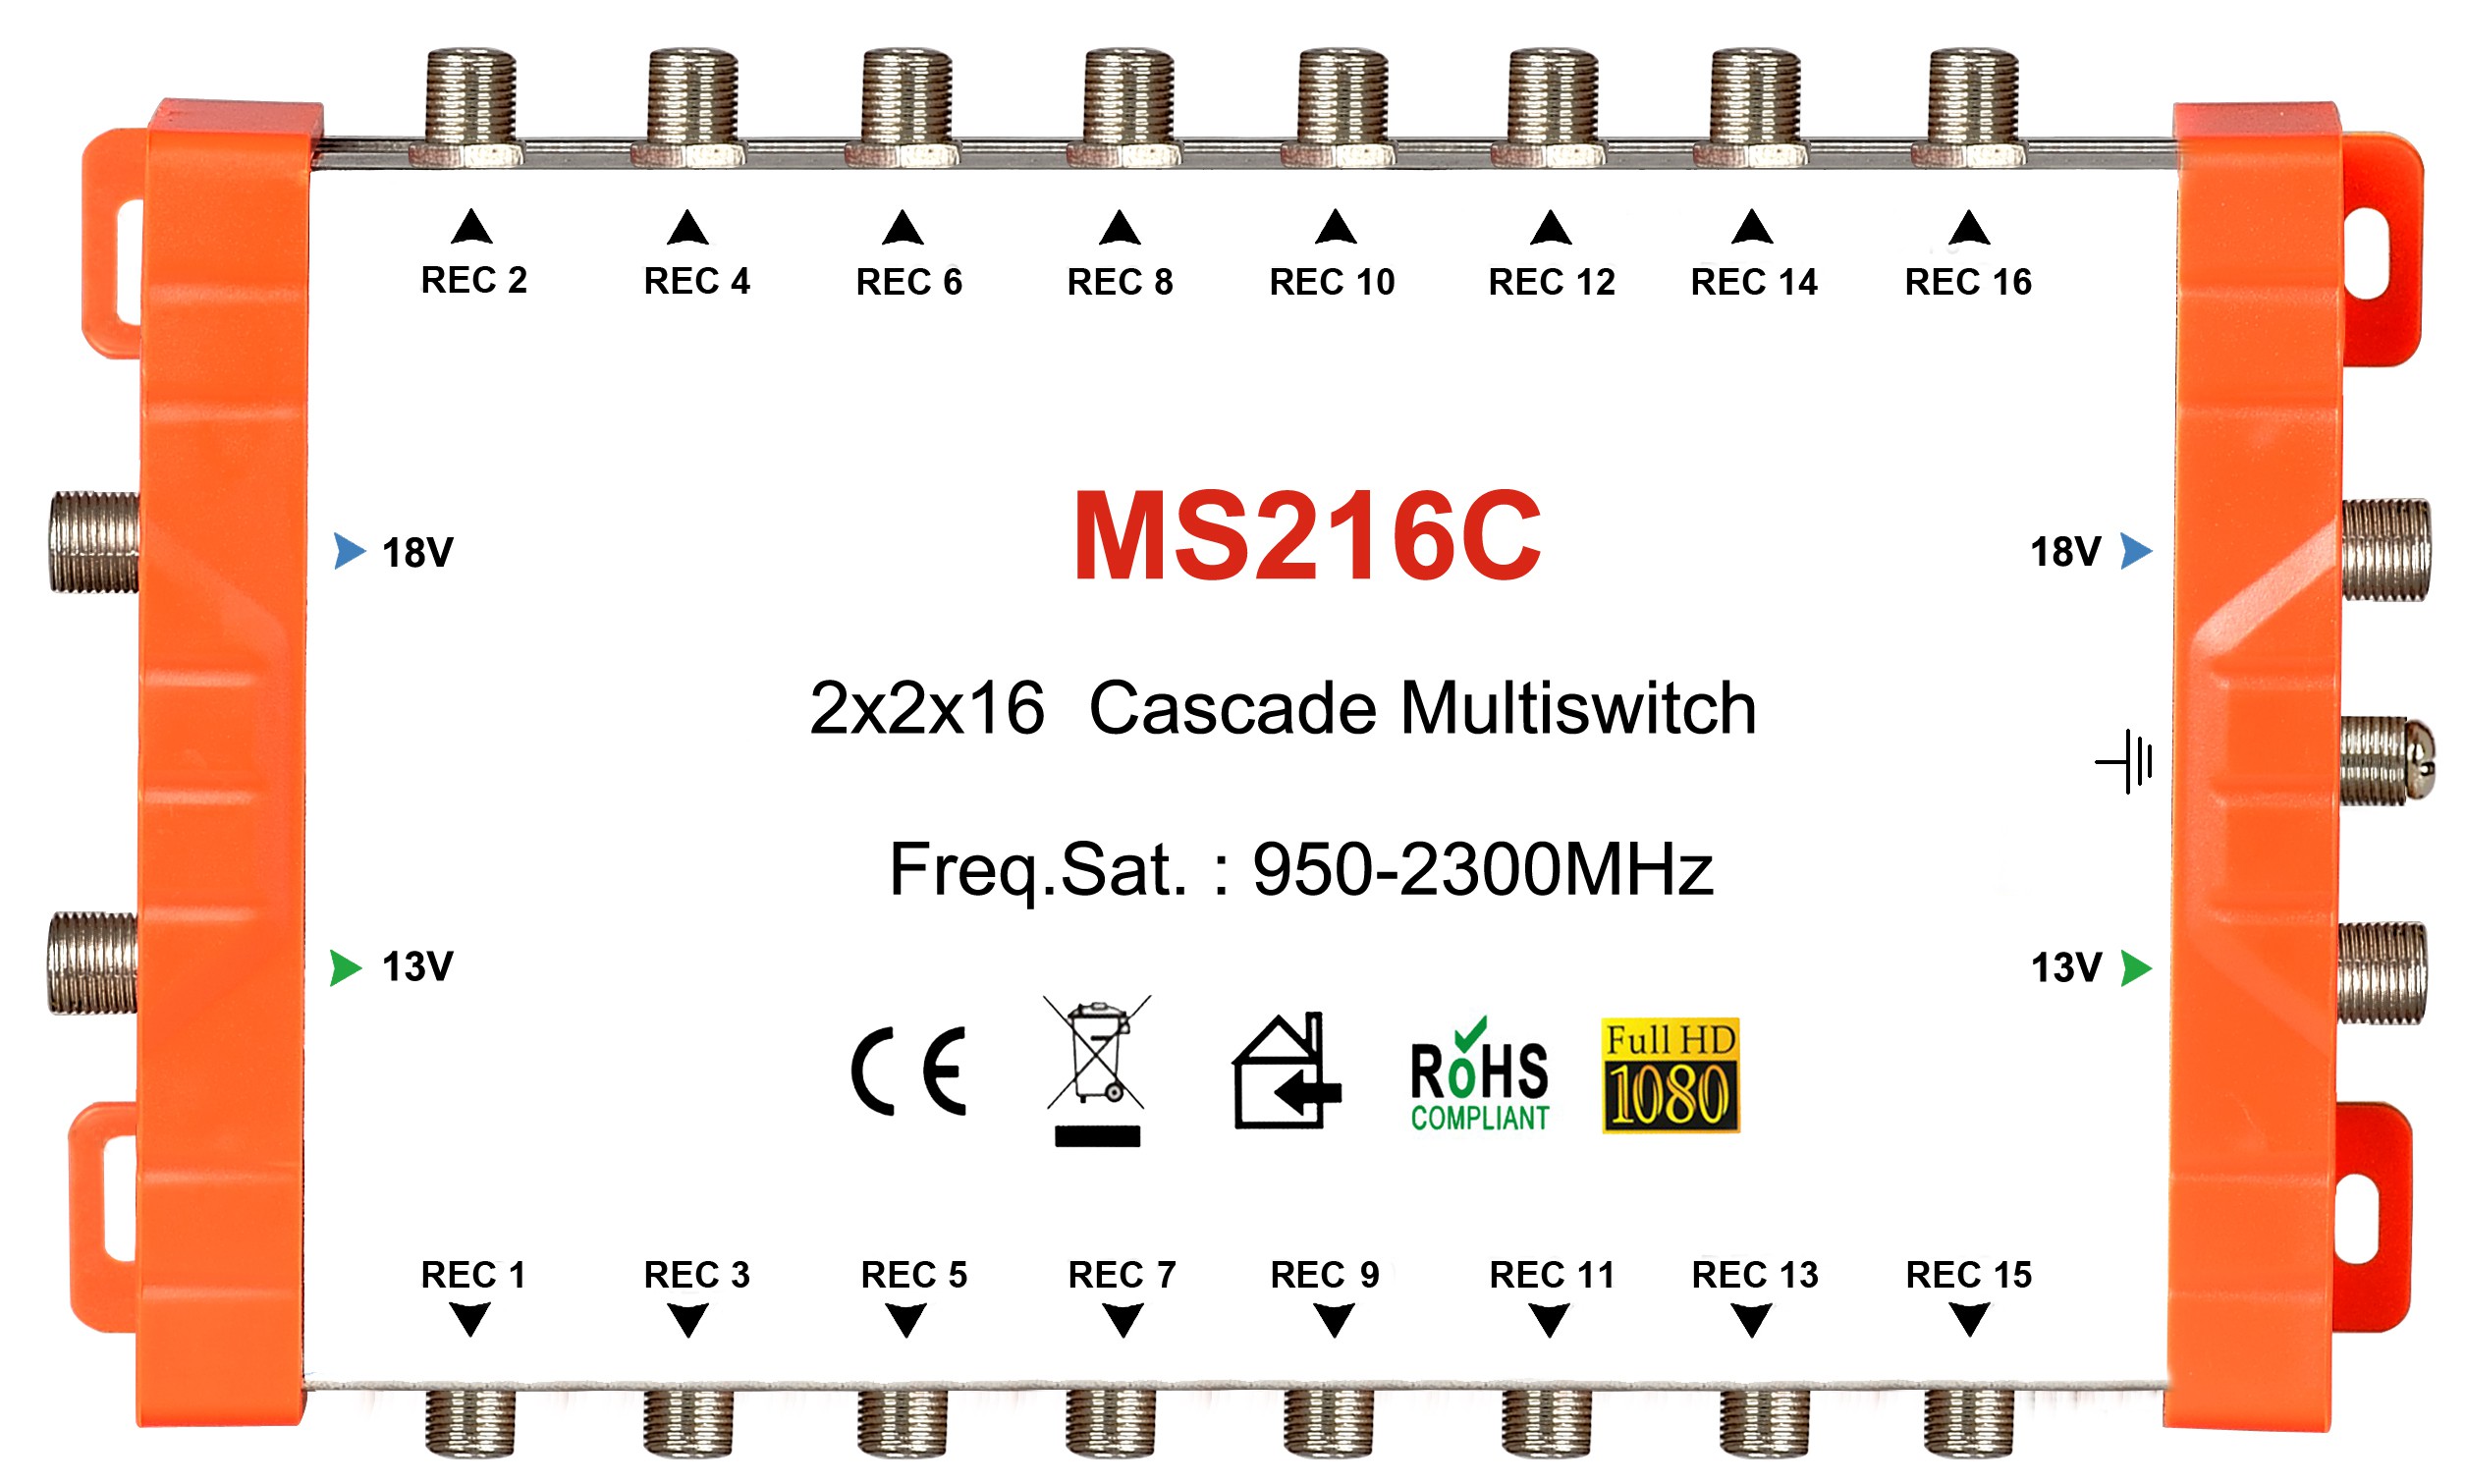 2x16 satellite multi-switch, Cascade multiswitch